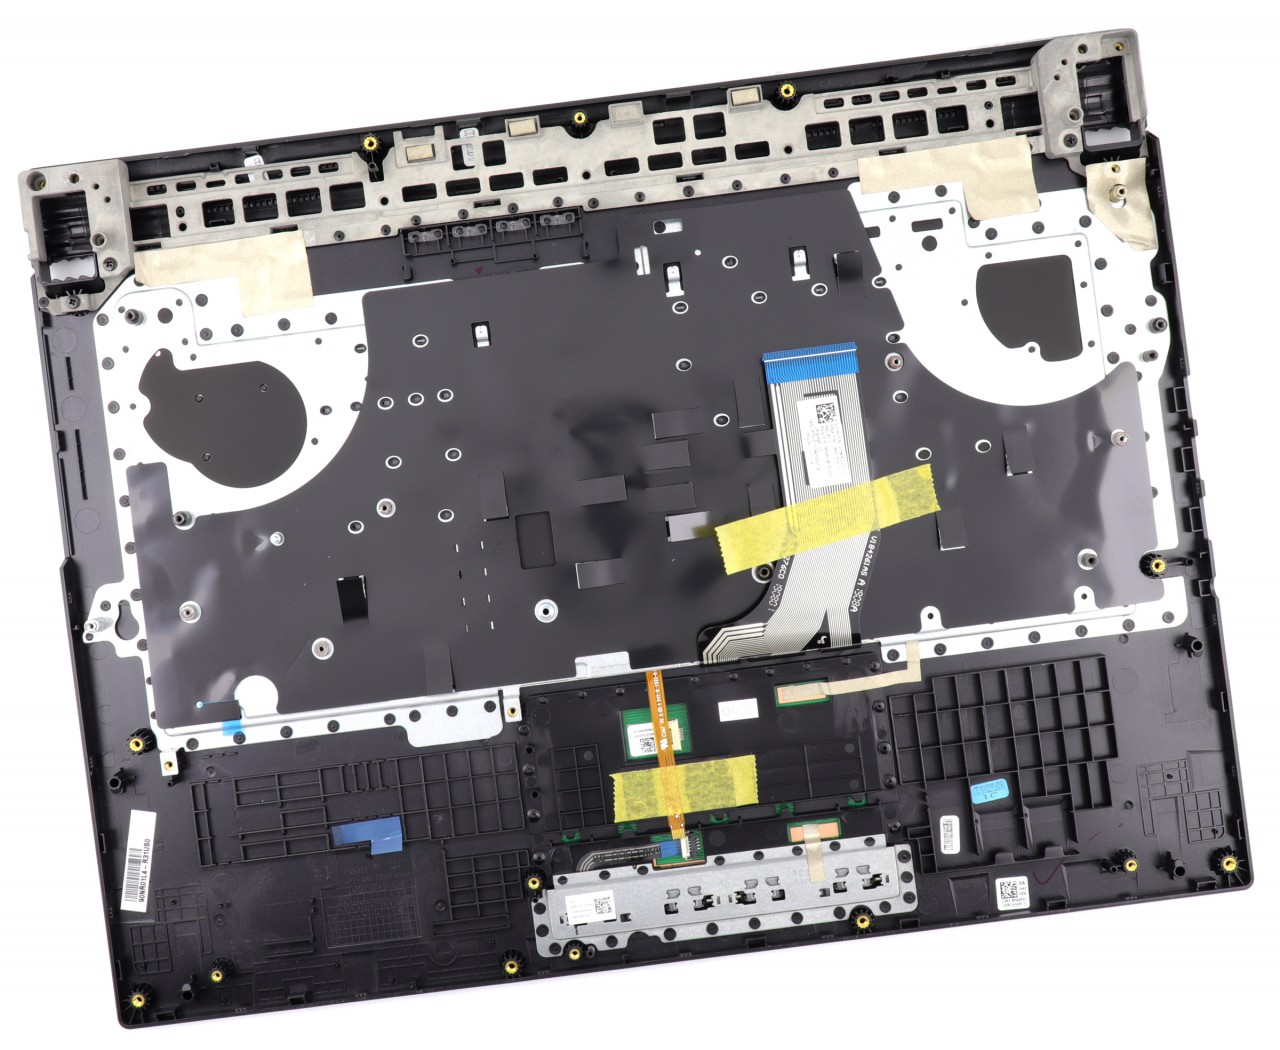 Tastatura Asus 9KNR0-4618US00 Neagra cu Palmrest Negru si TouchPad iluminata RGB backlit